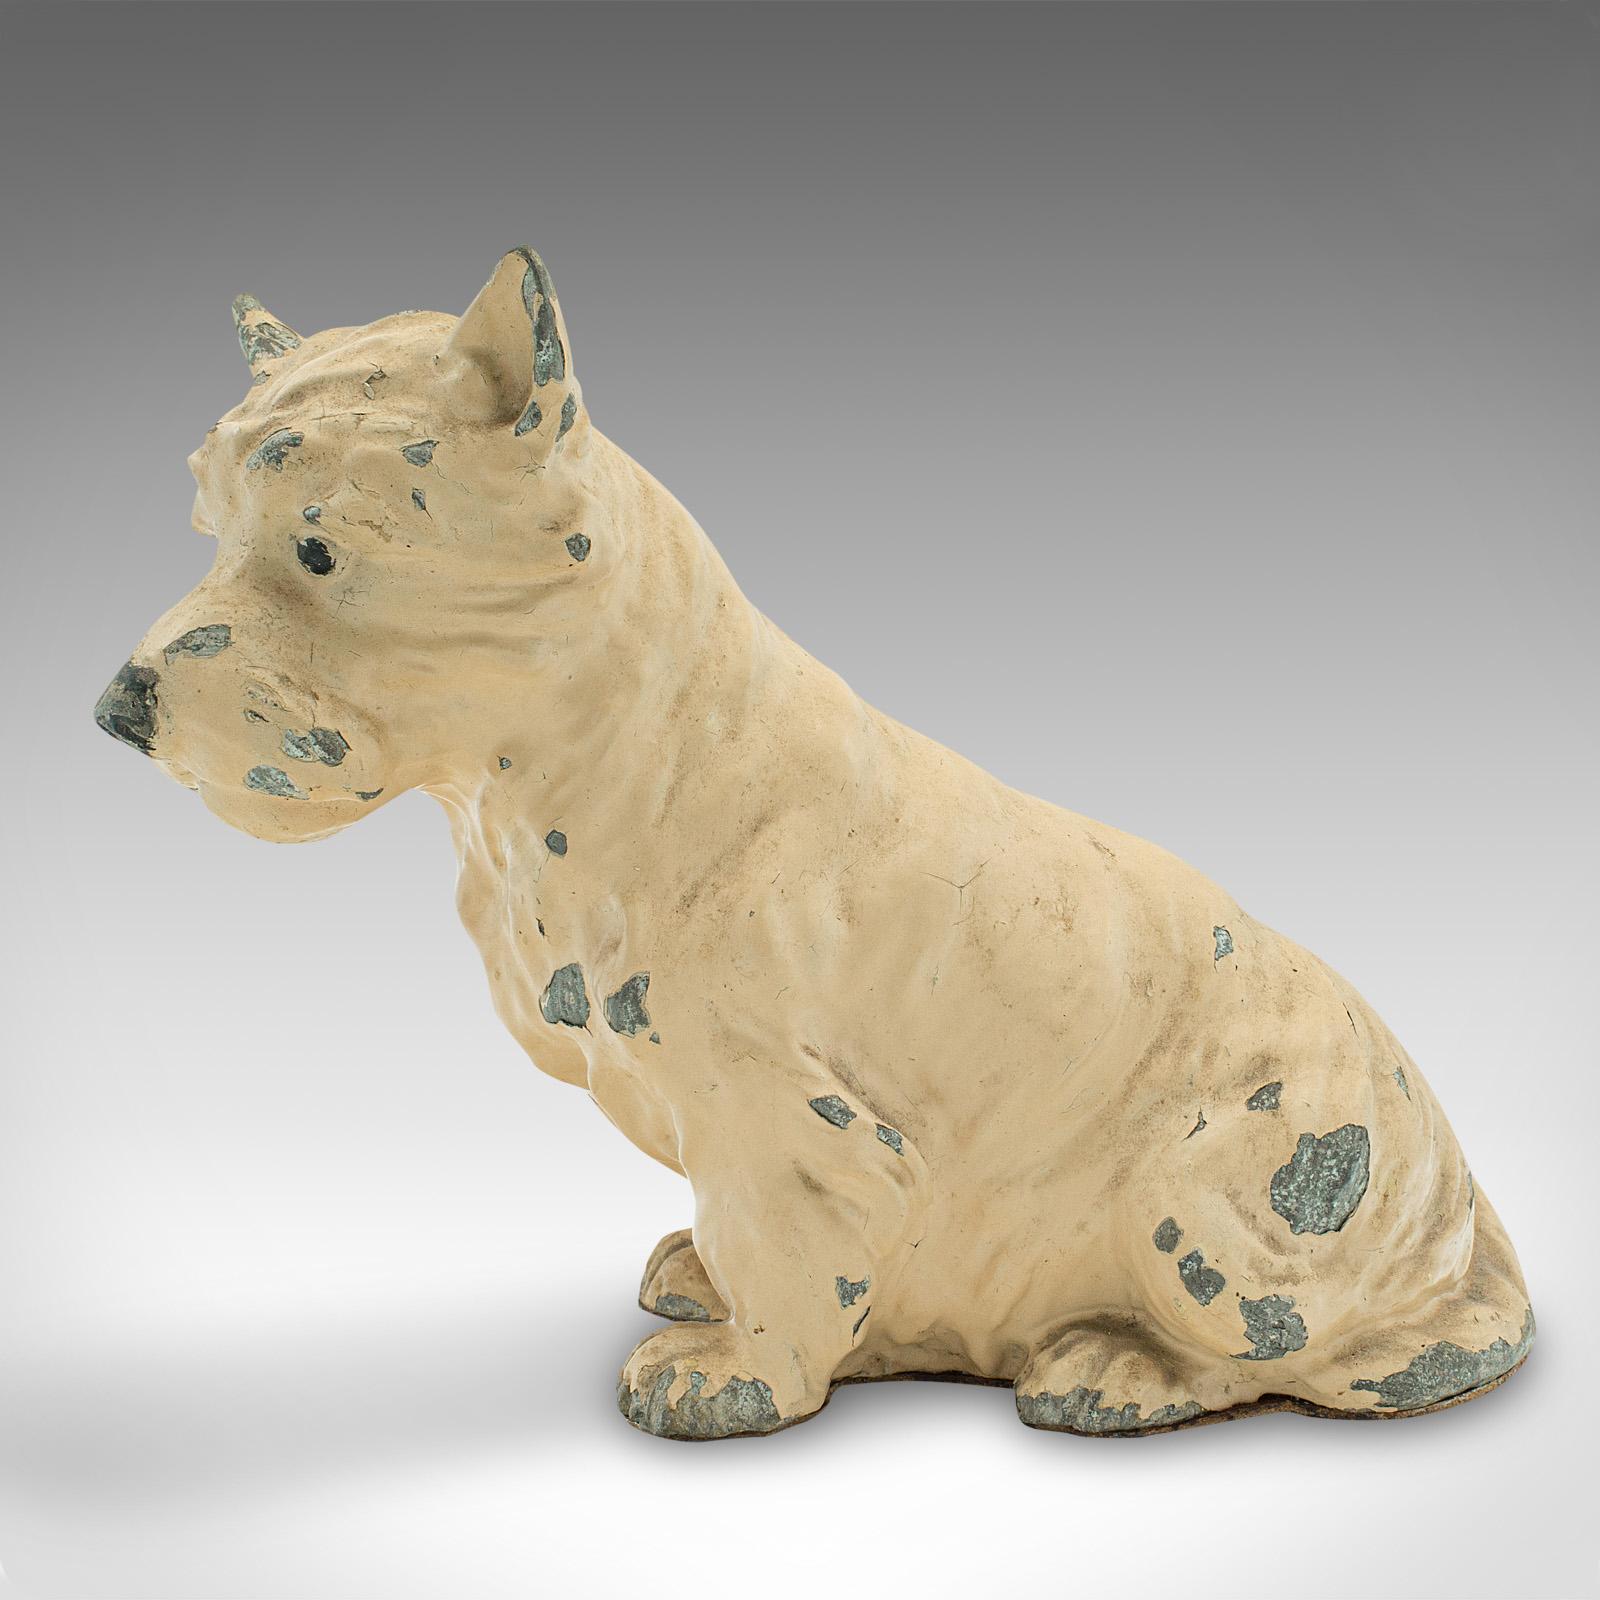 20th Century Antique Decorative Westie Figure, British, Spelter, Terrier, Ornament, Edwardian